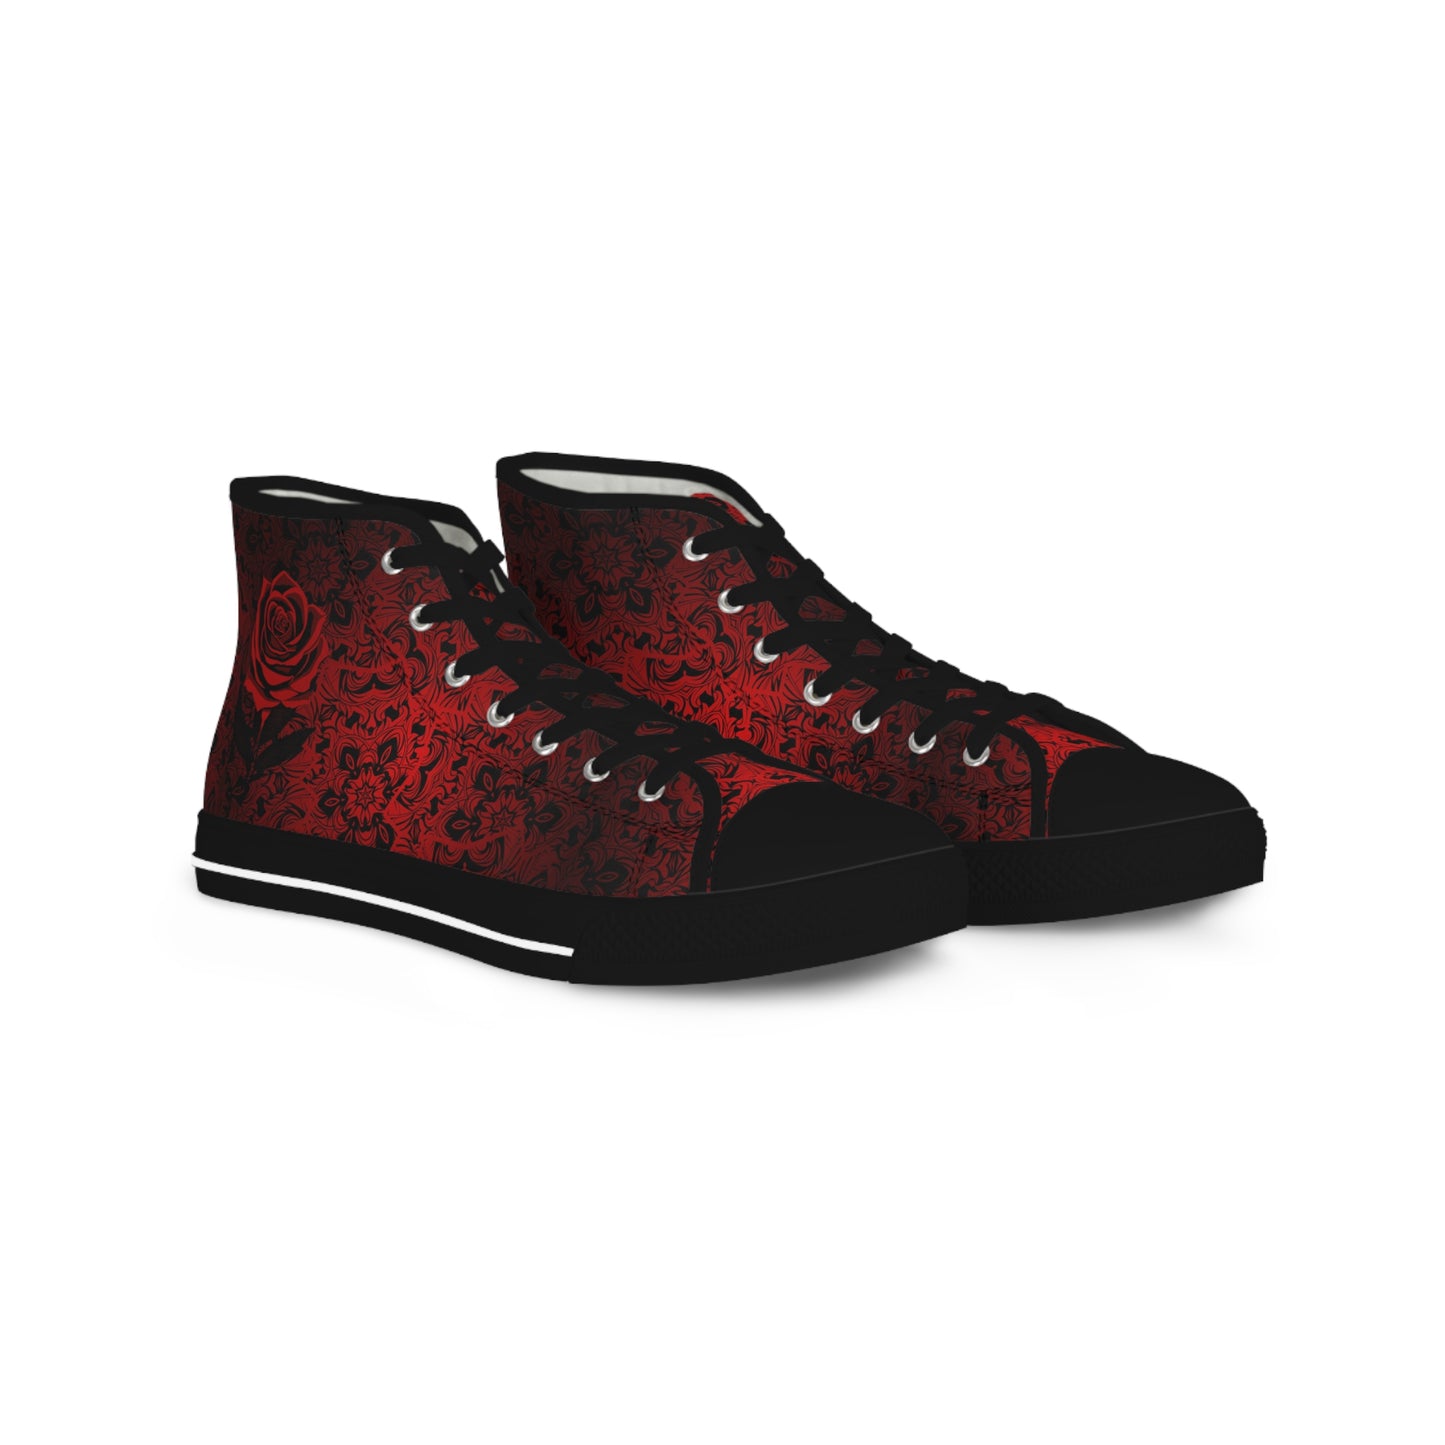 Hypnotic Rose Black-Red High Top Sneakers